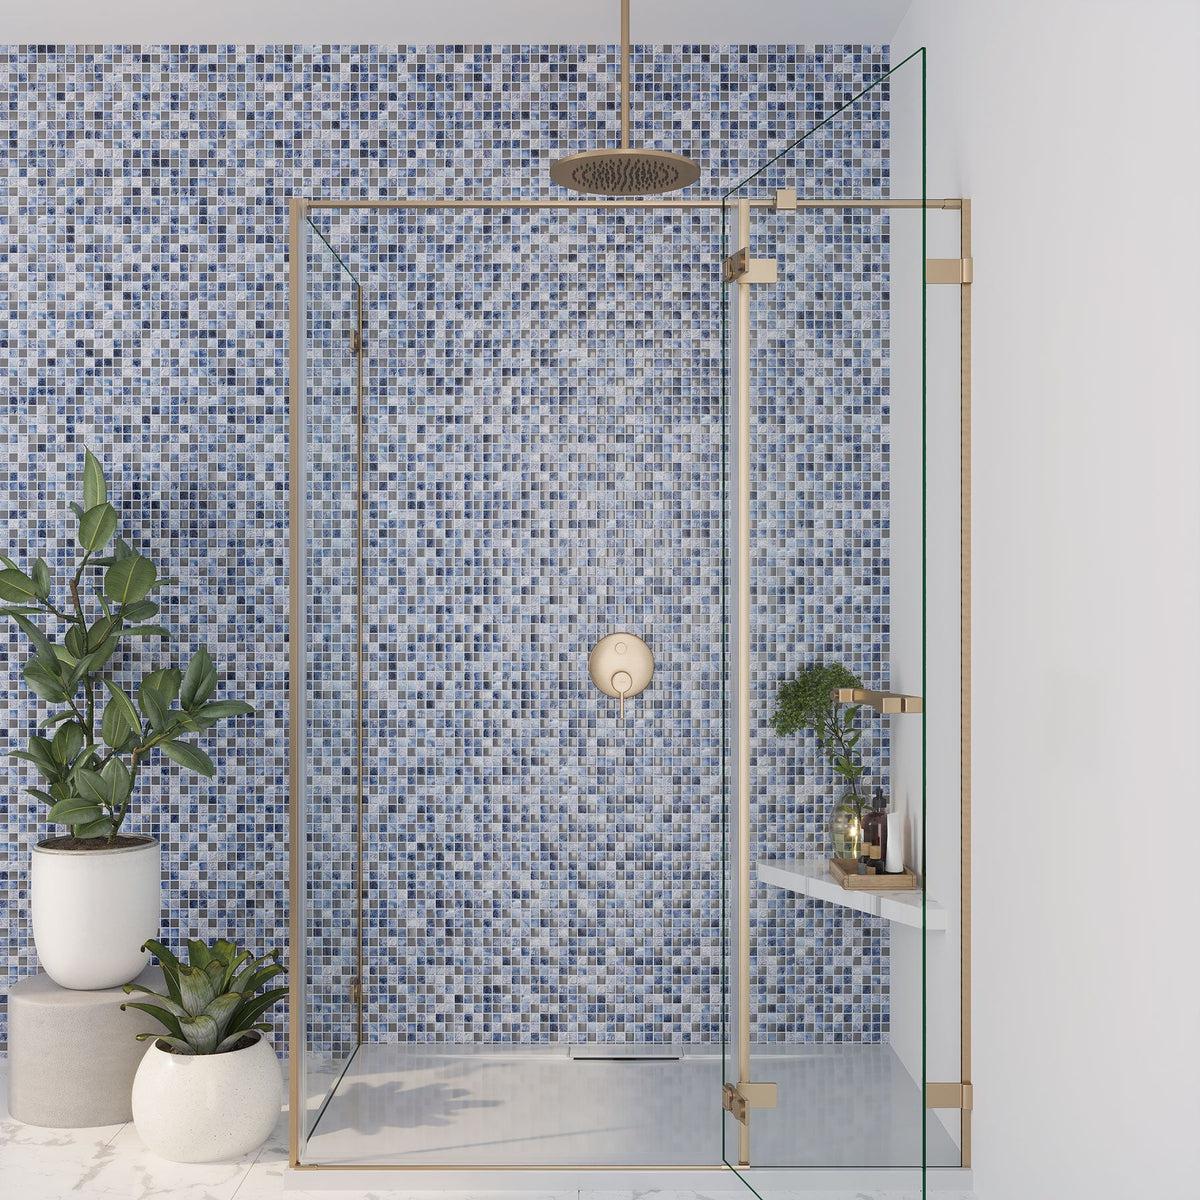 Shower with Eclectic Blue Square Mosaic Tile Backsplash